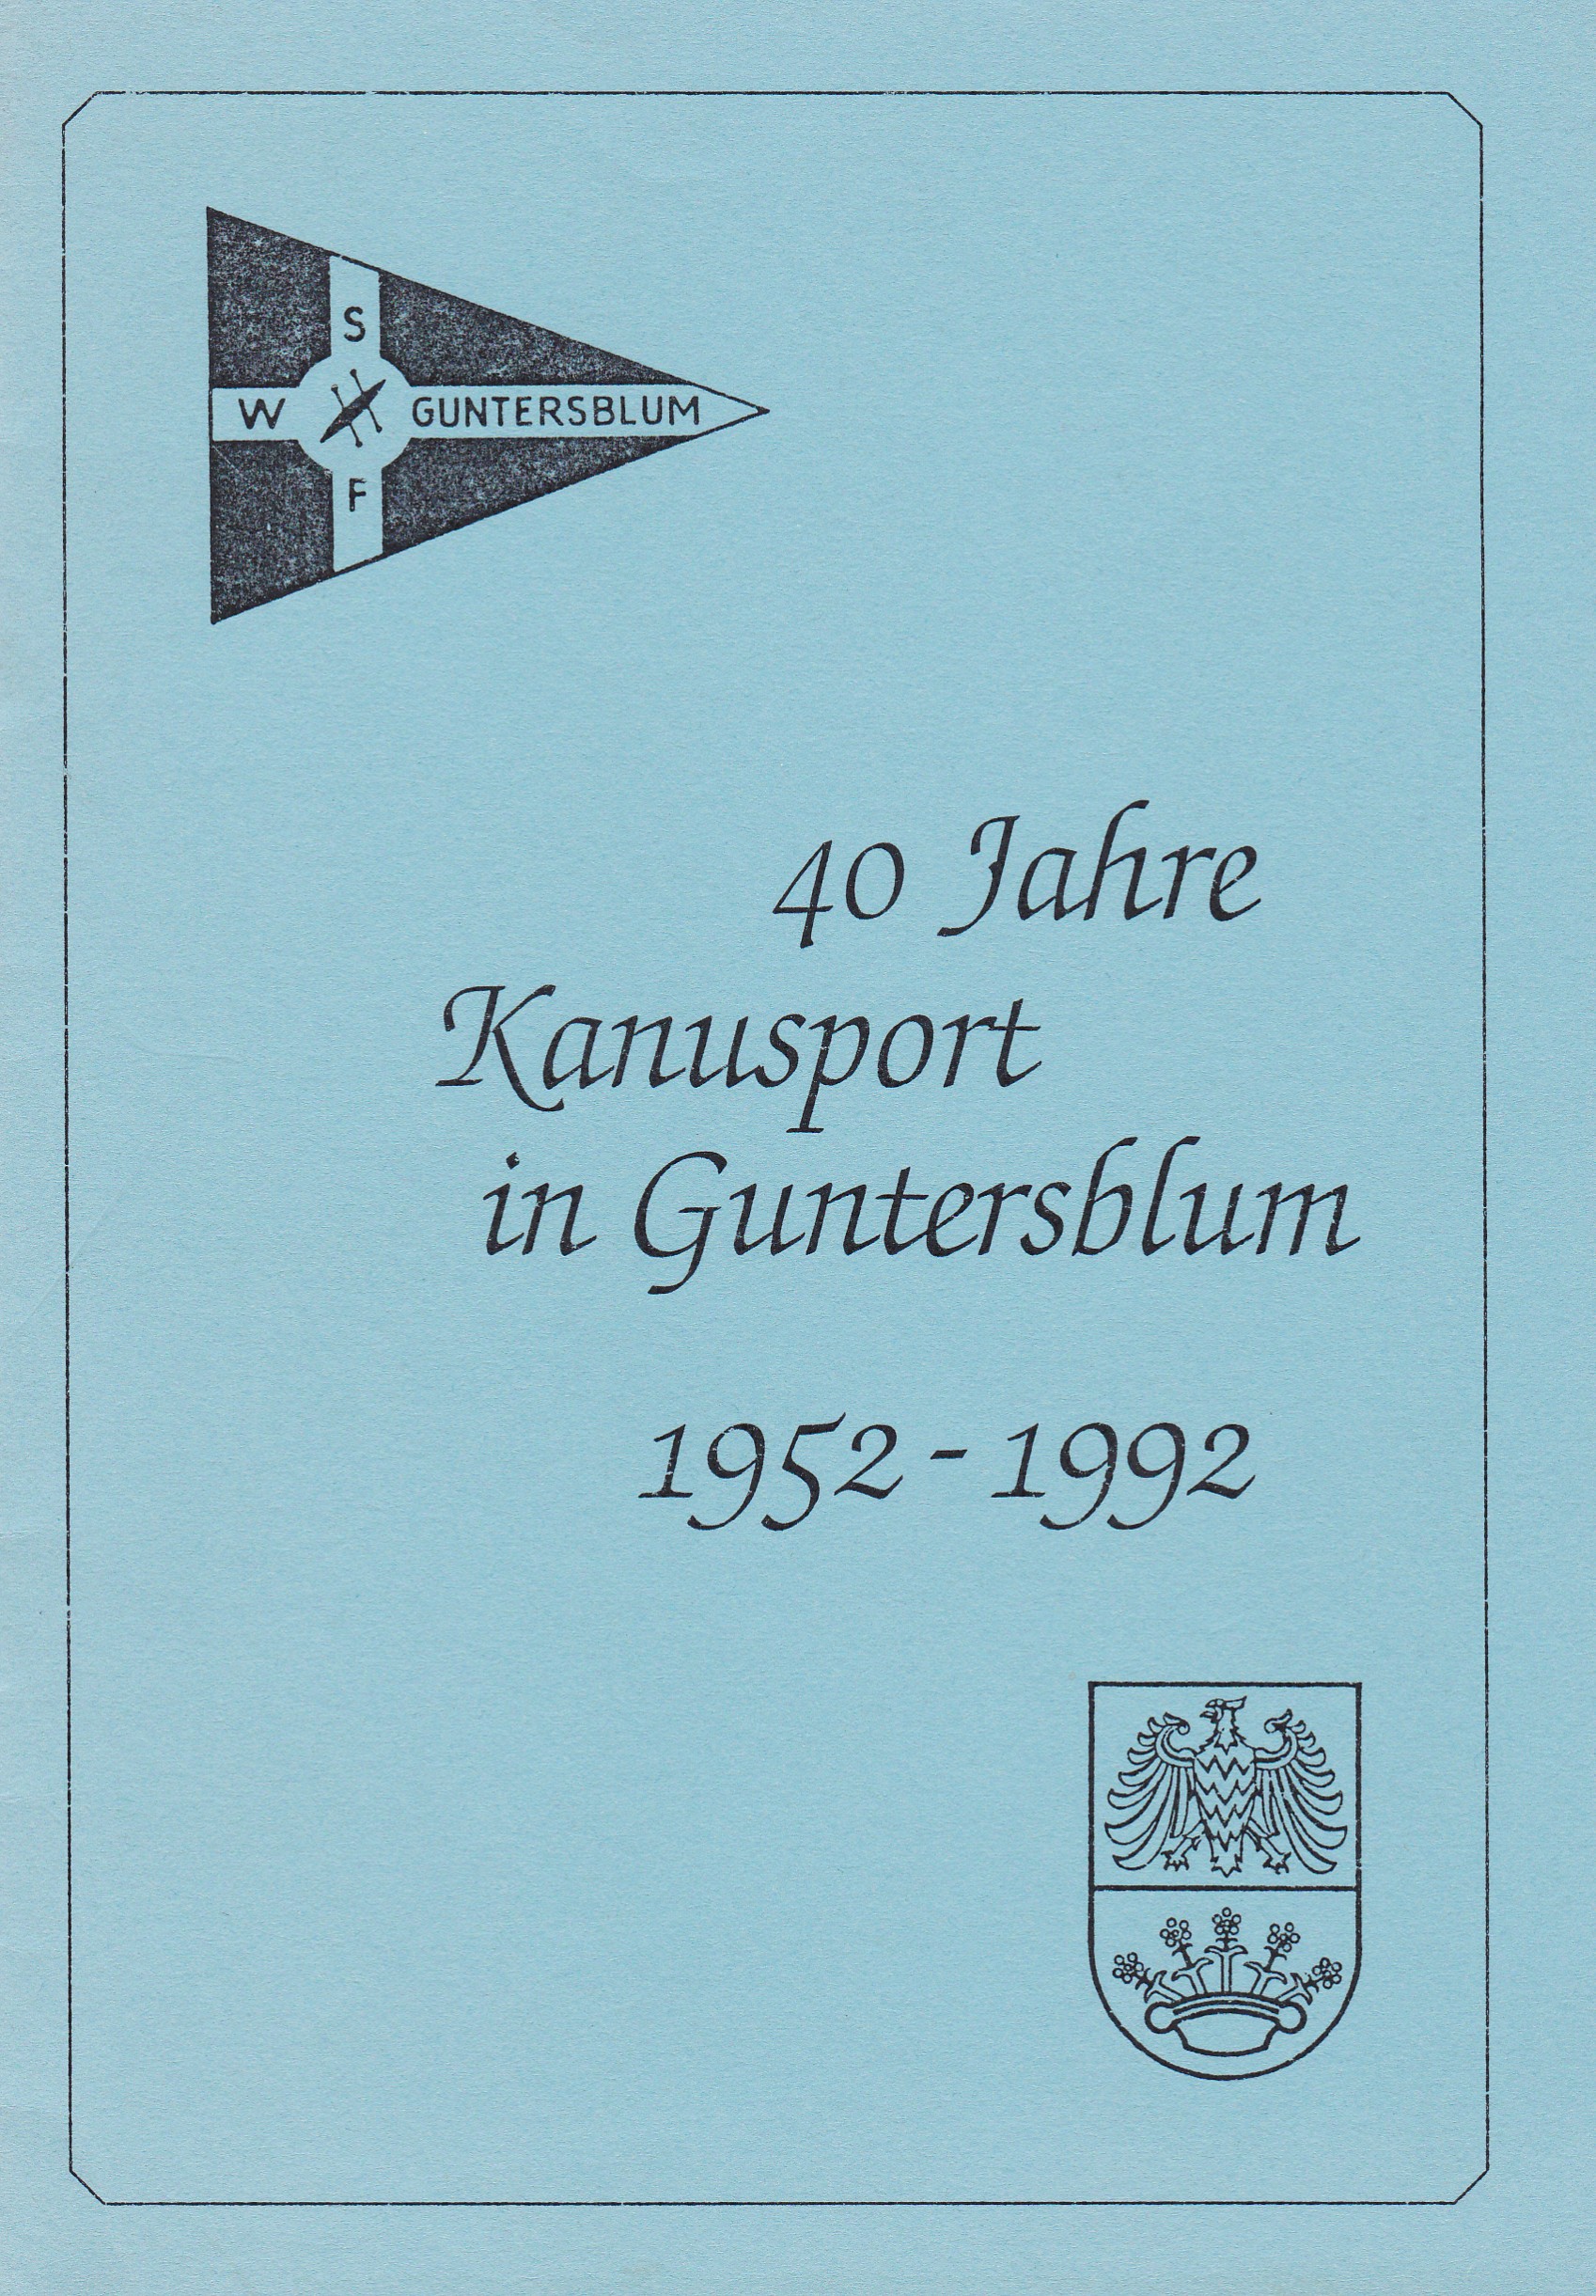 40 Jahre Kanusport in Guntersblum 1952-1992 (Museum Guntersblum  im Kellerweg 20 CC BY-NC-SA)